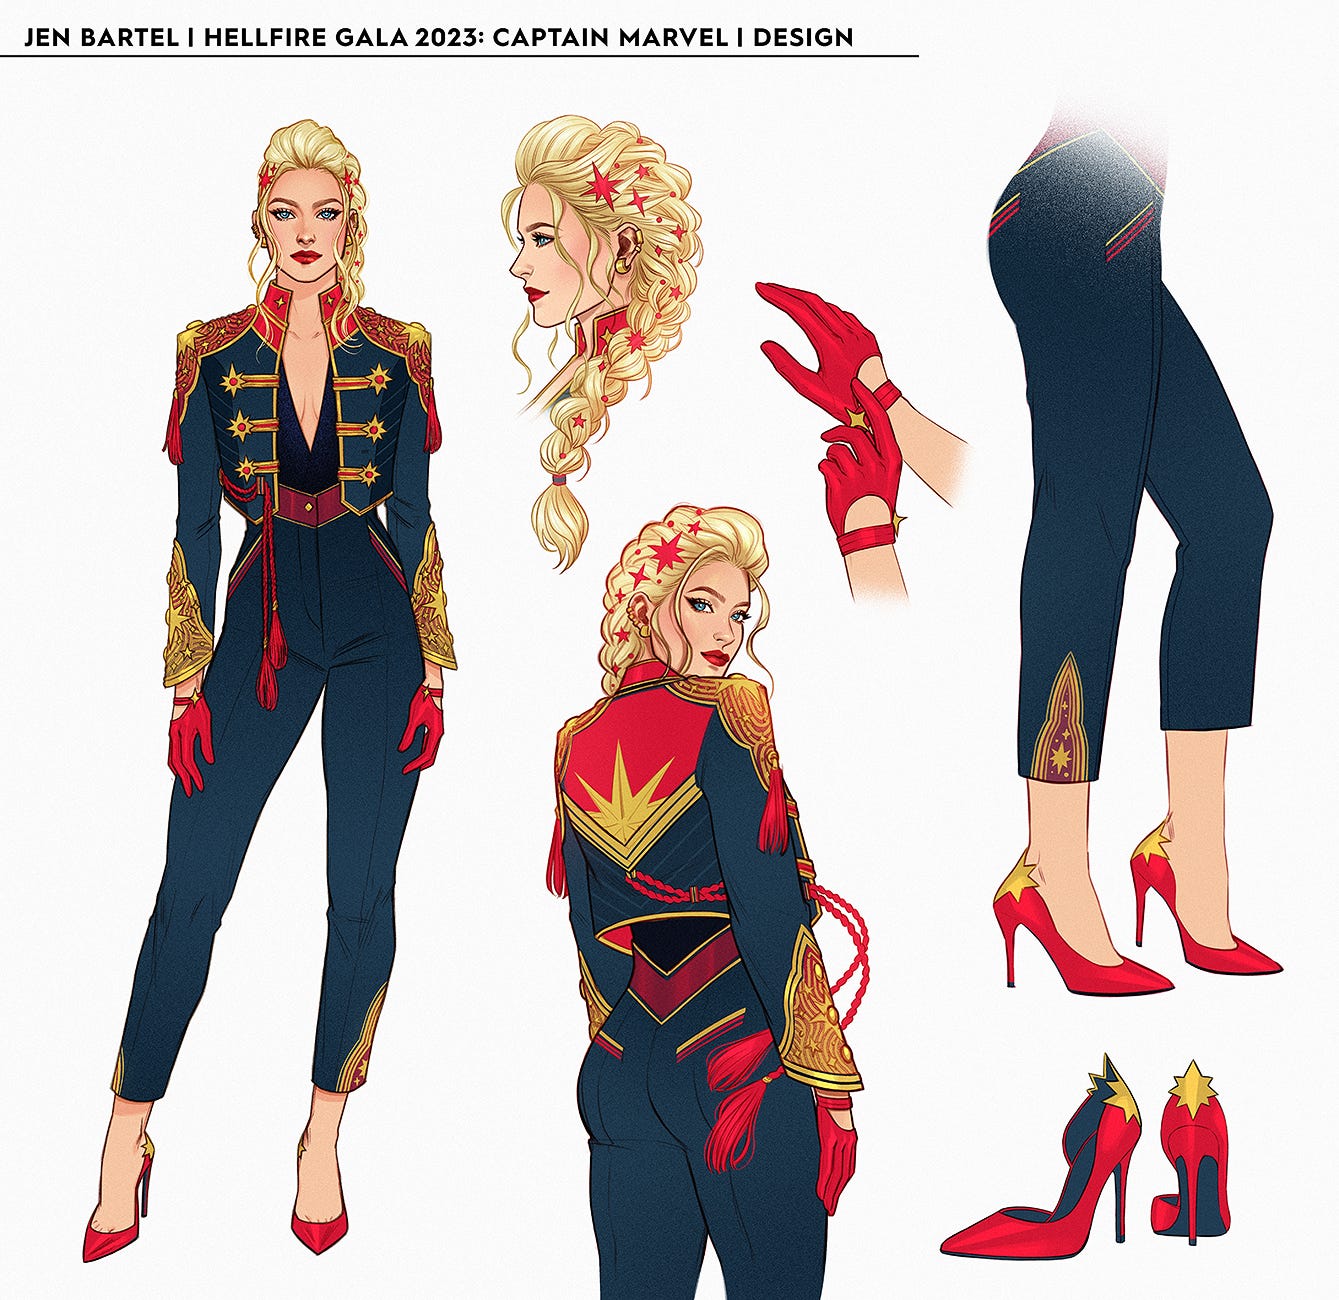 Captain Marvel Hellfire Gala 2023 by Jen Bartel